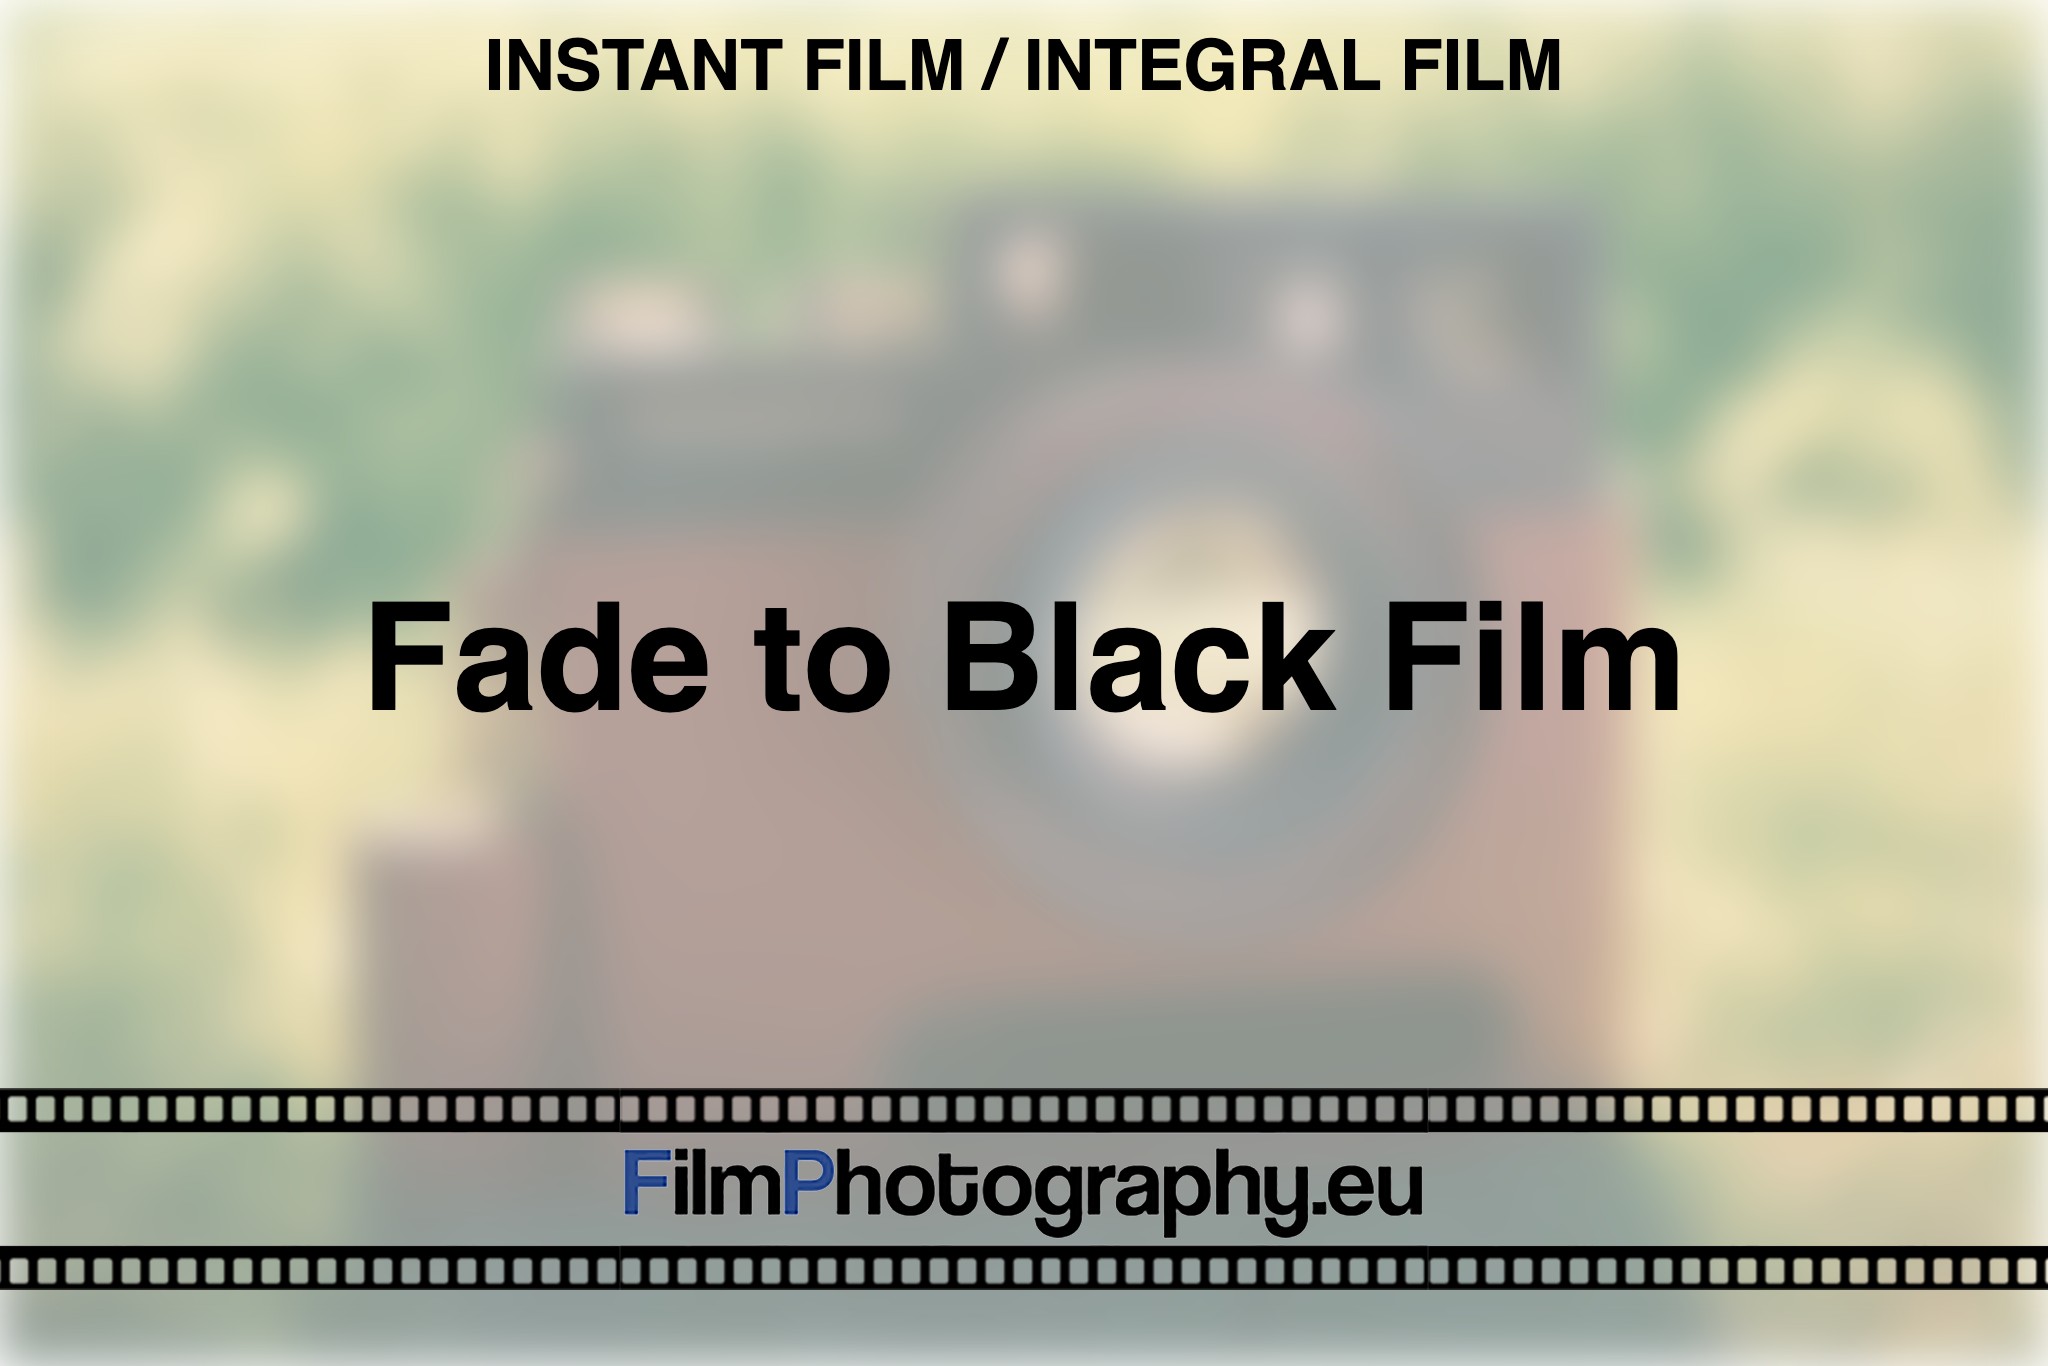 fade-to-black-film-instant-film-integral-film-bnv